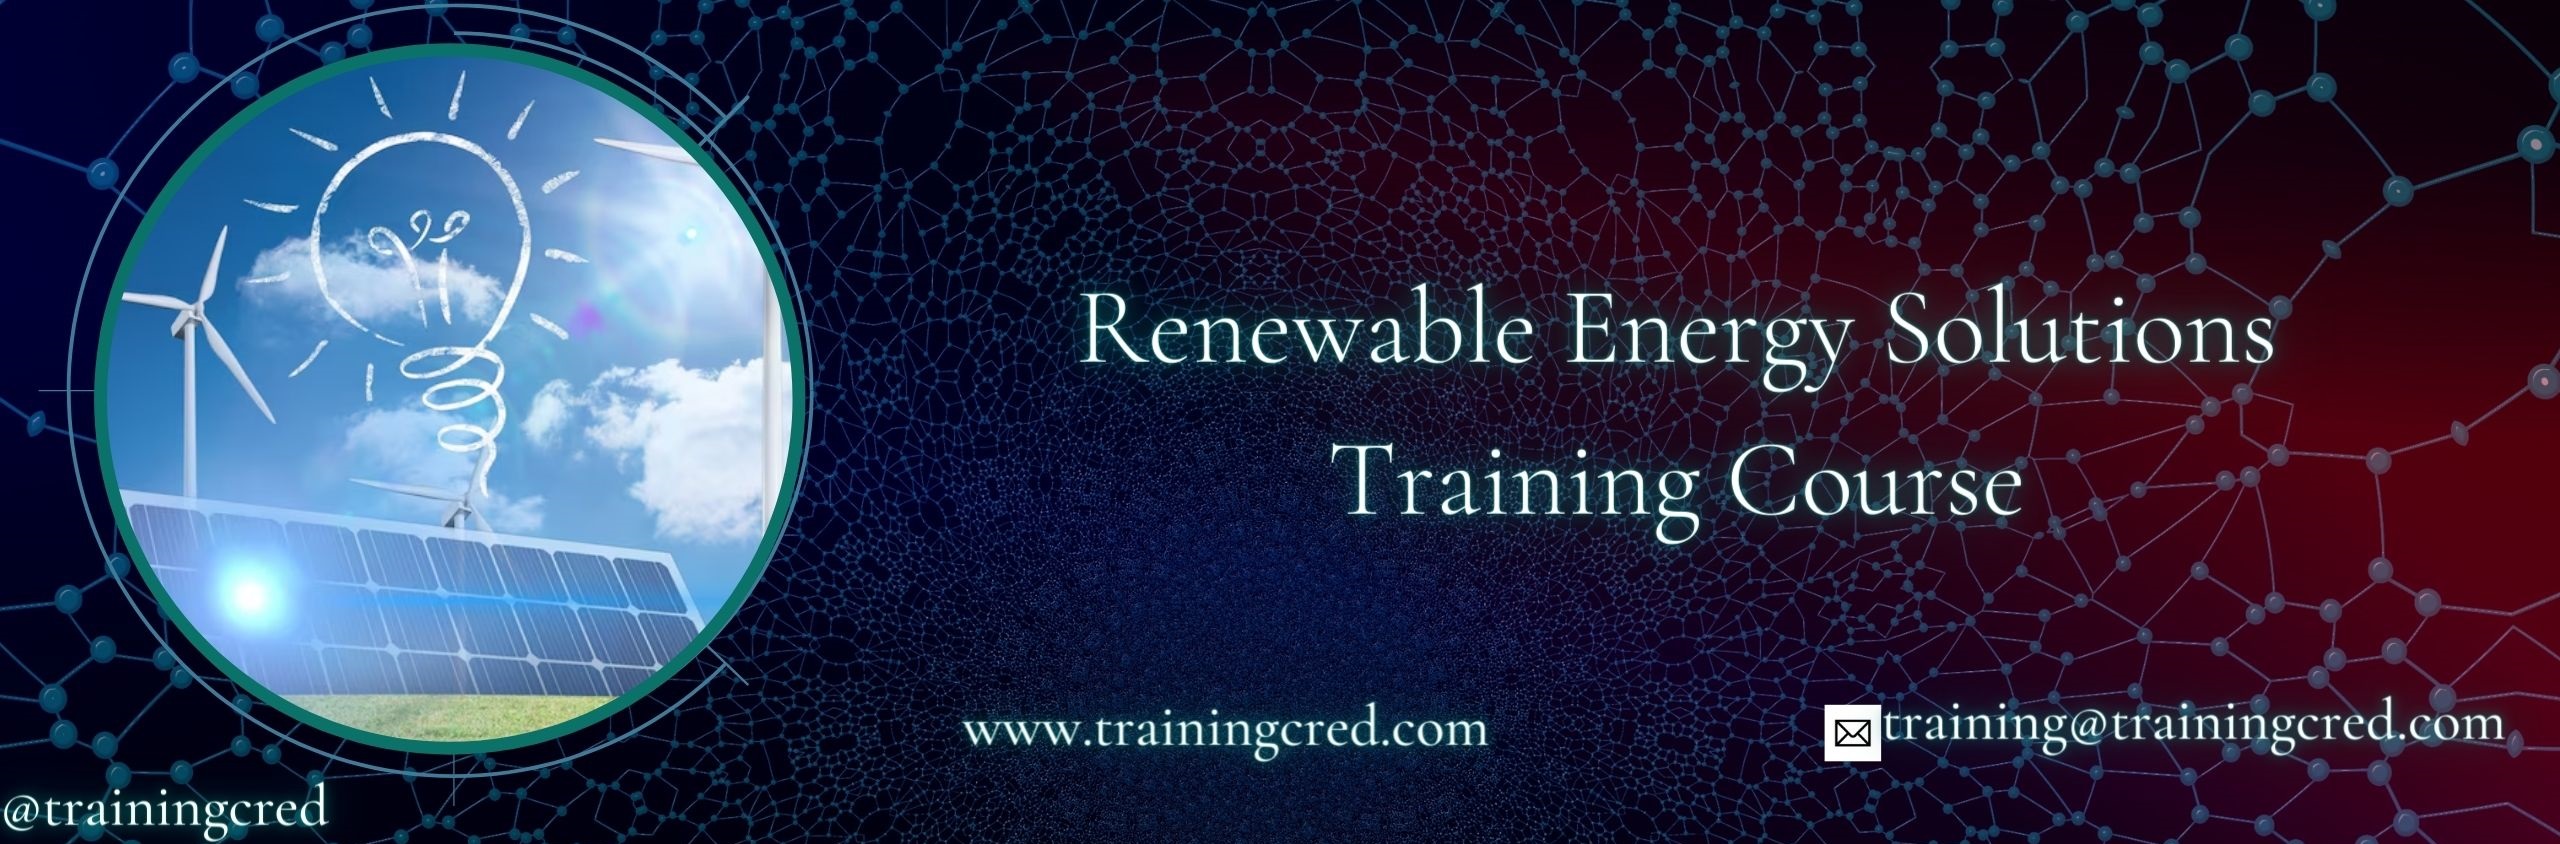 Renewable Energy Solutions Training